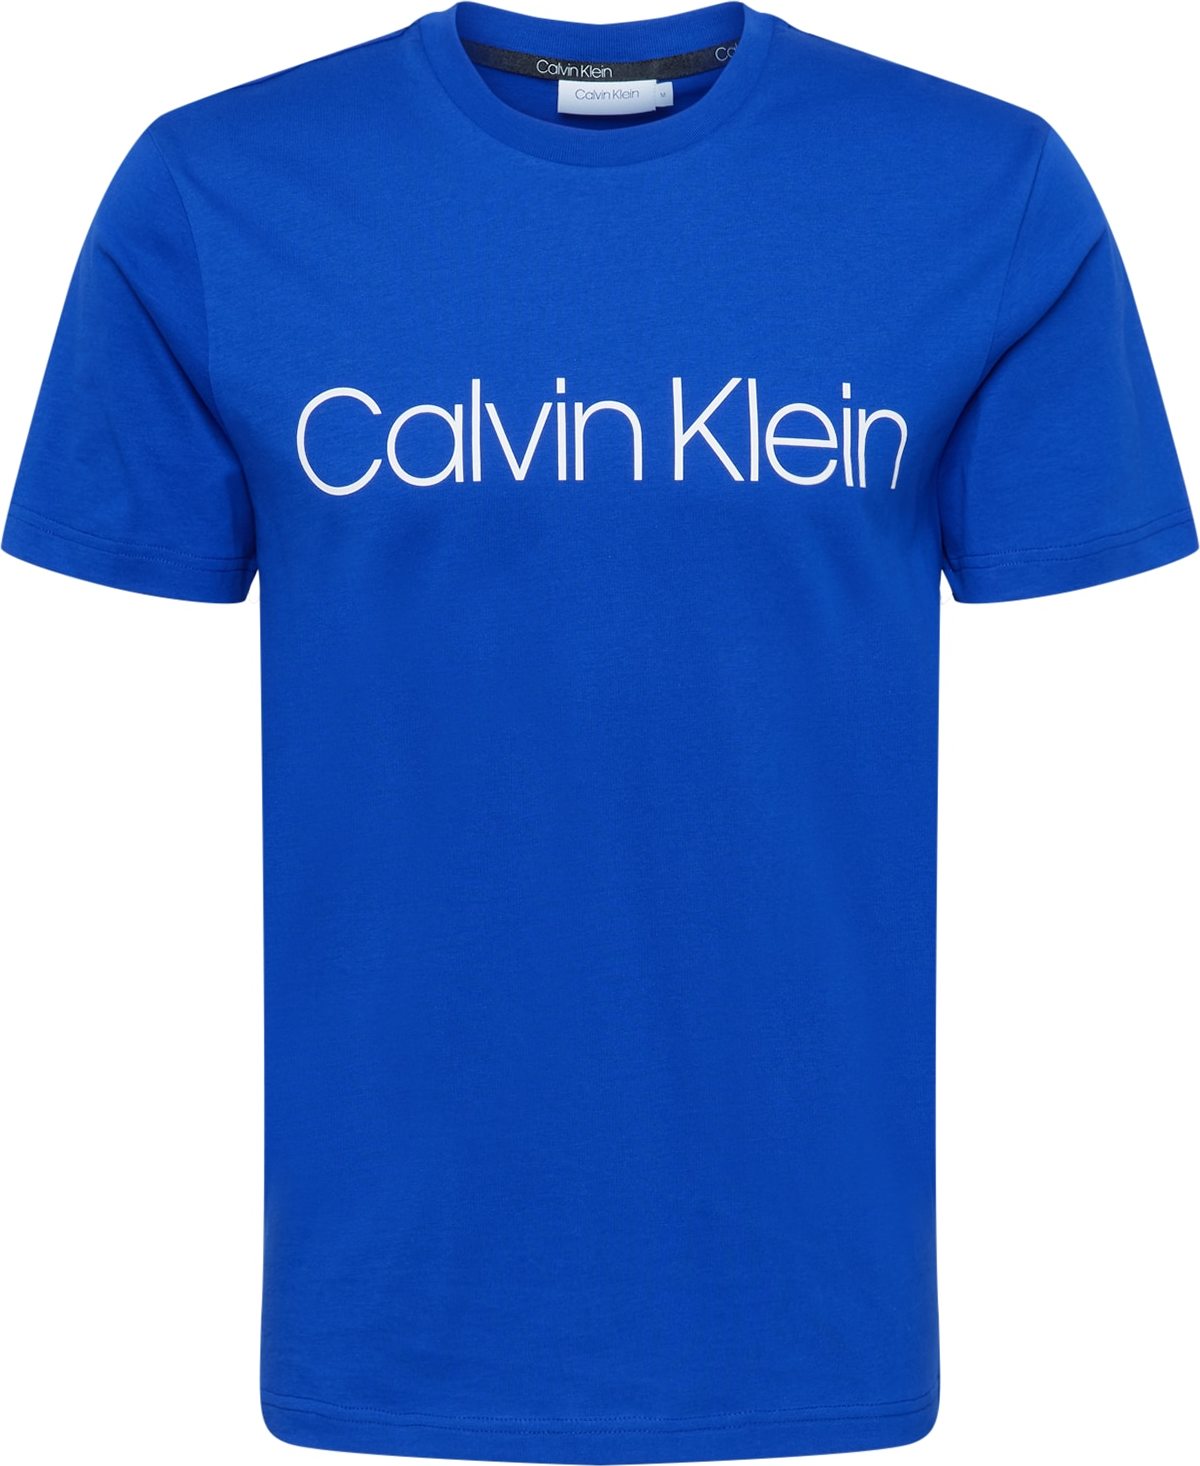 Calvin Klein Tričko královská modrá / bílá